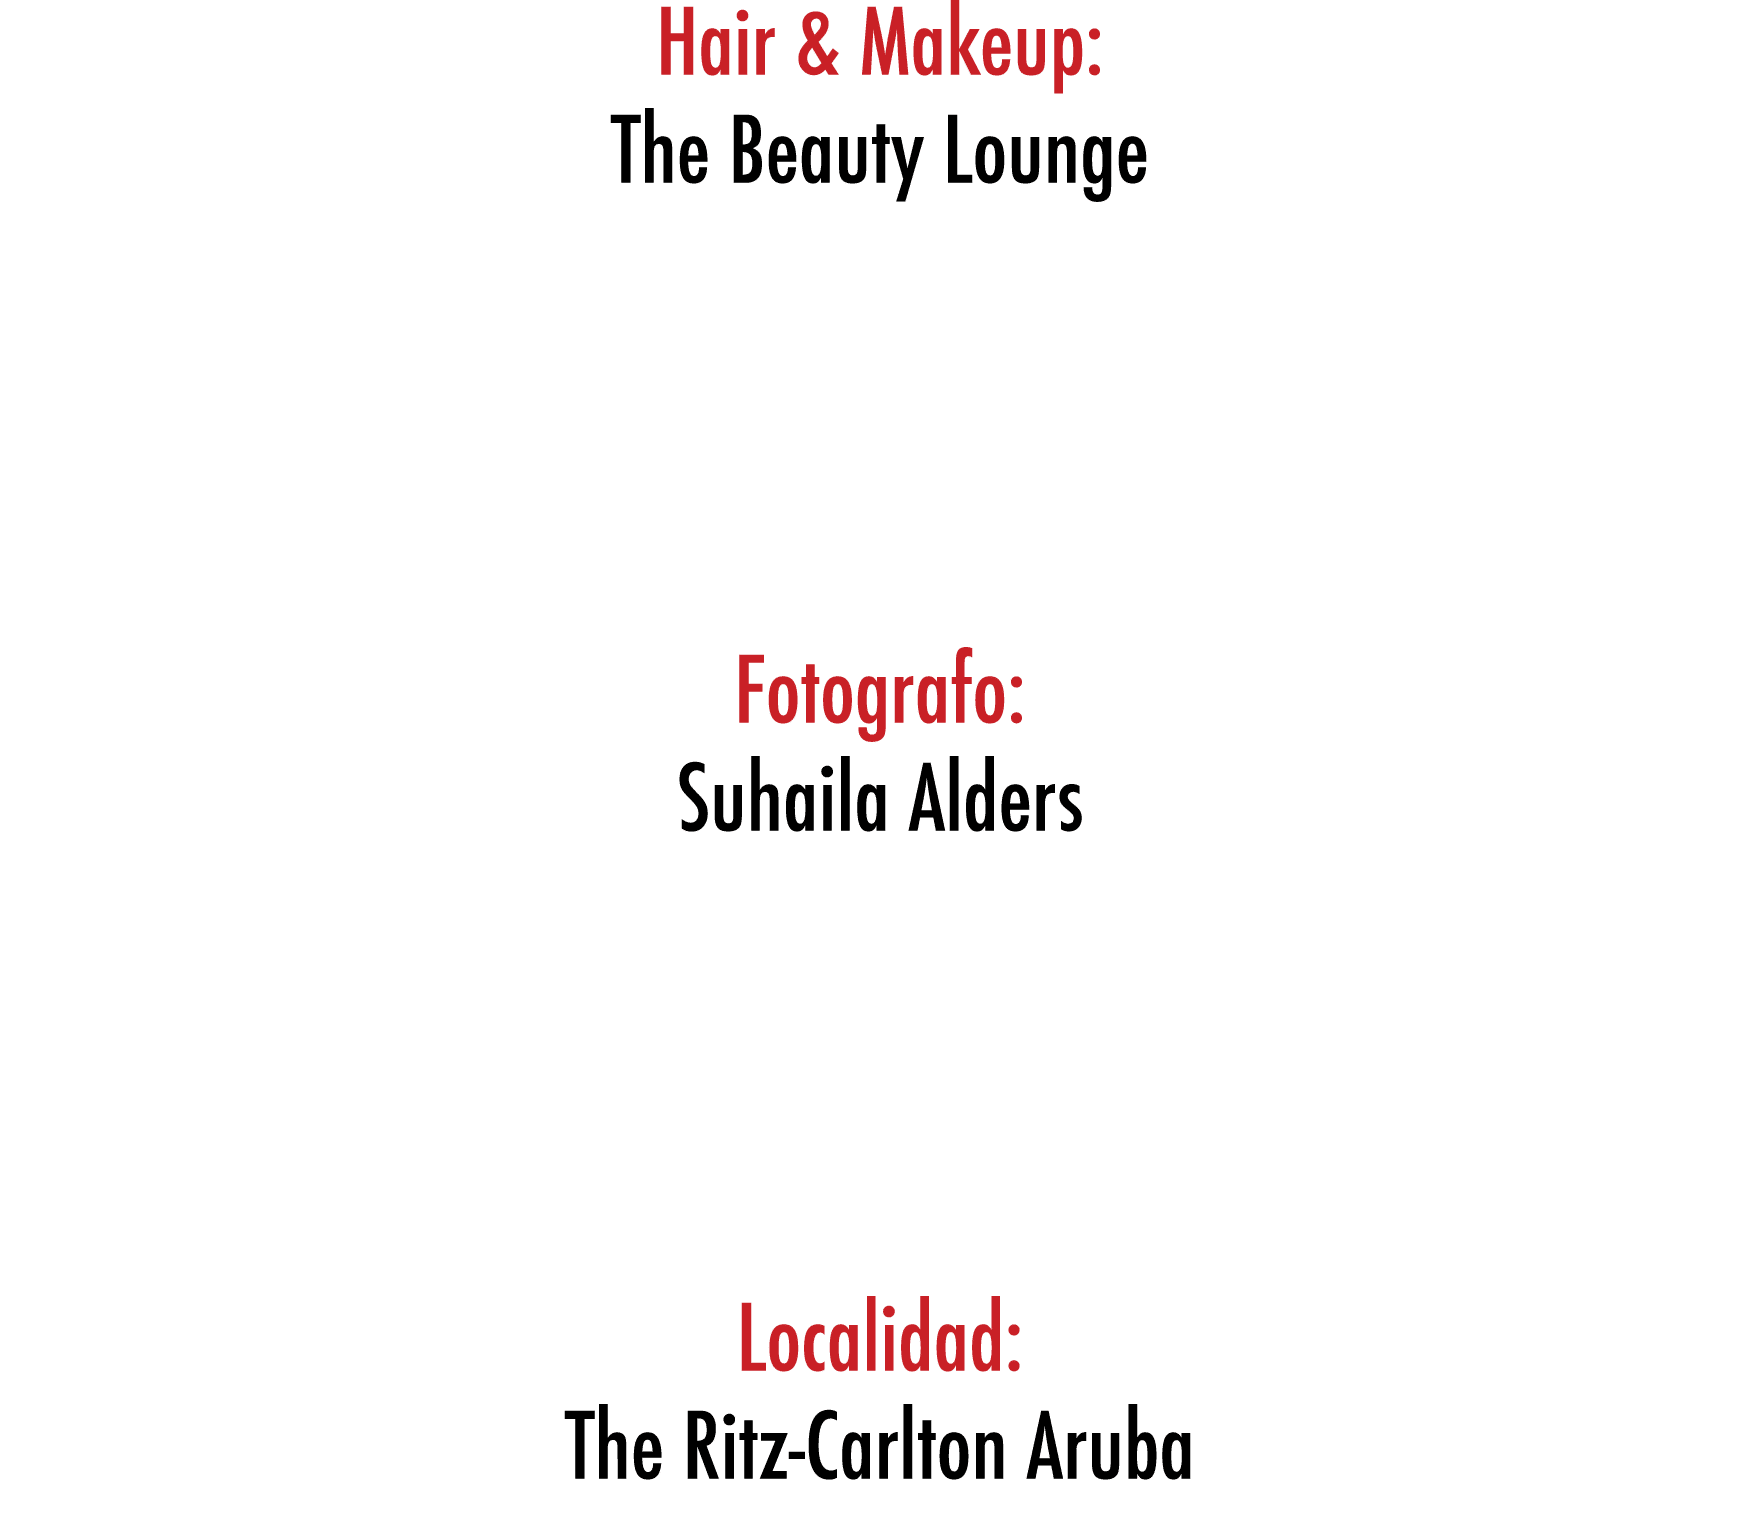 Hair & Makeup: The Beauty Lounge   Fotografo: Suhaila Alders   Localidad: The Ritz-Carlton Aruba